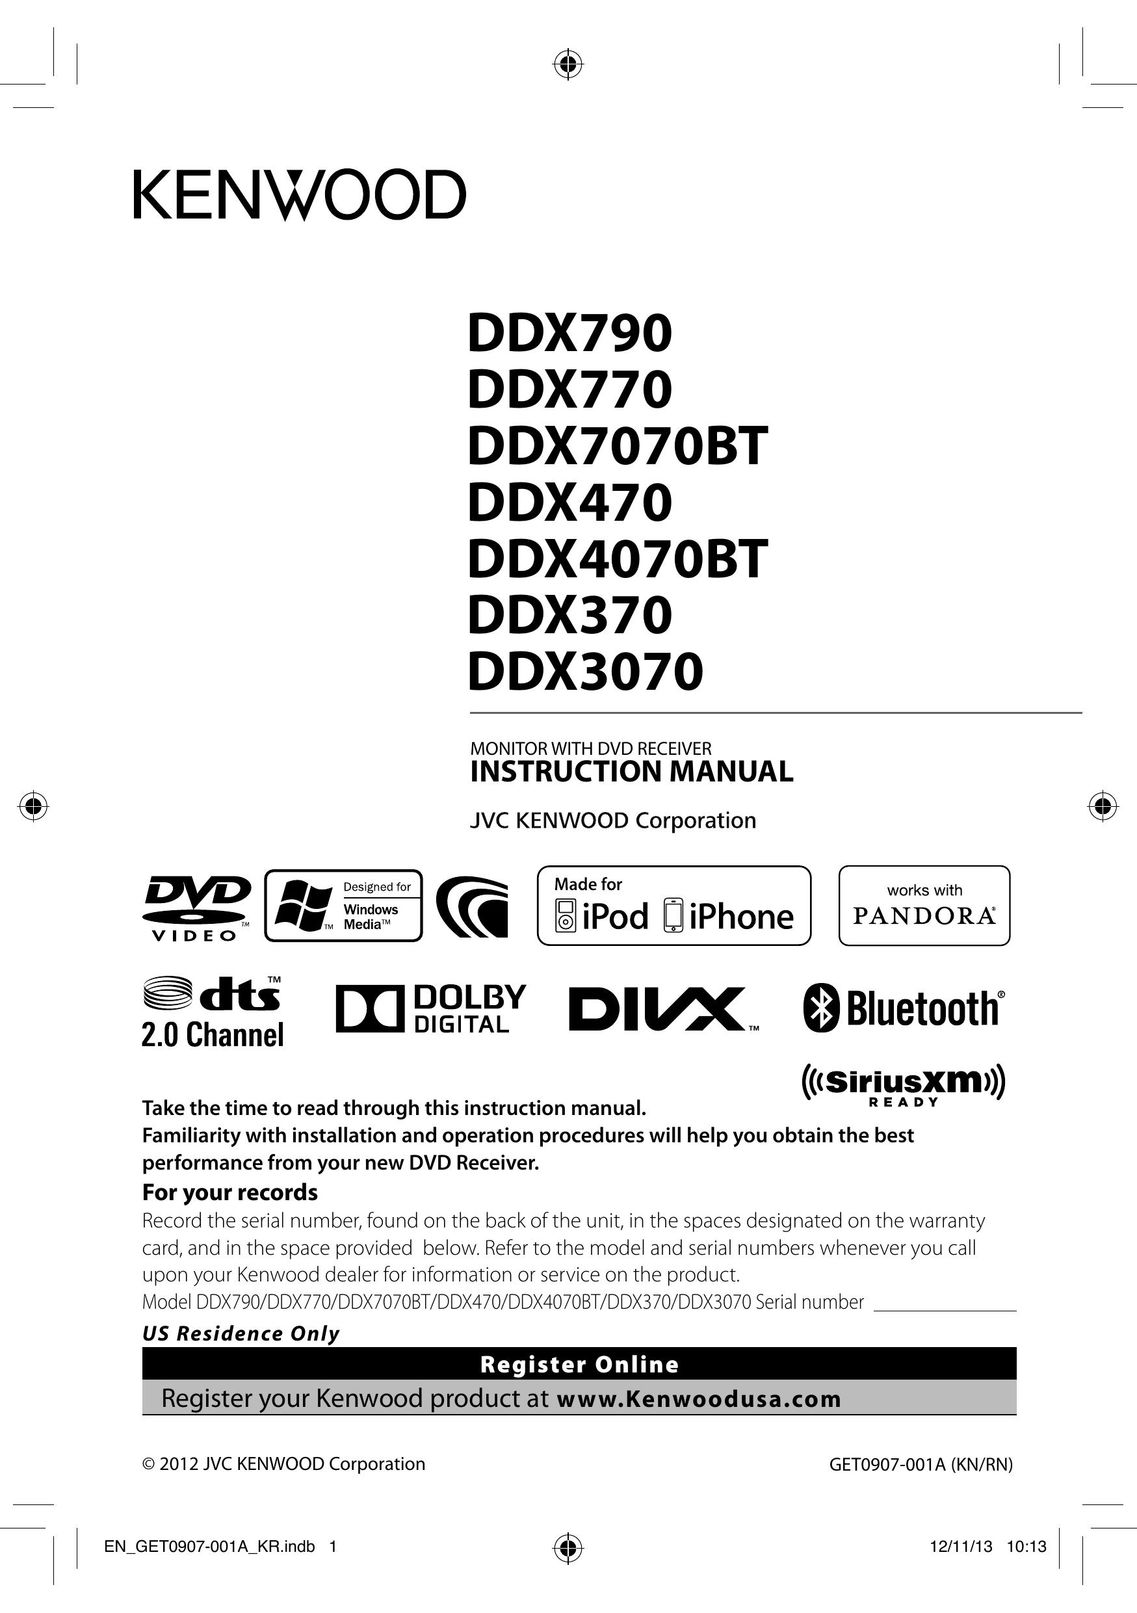 Kenwood DDX3070 Computer Monitor User Manual